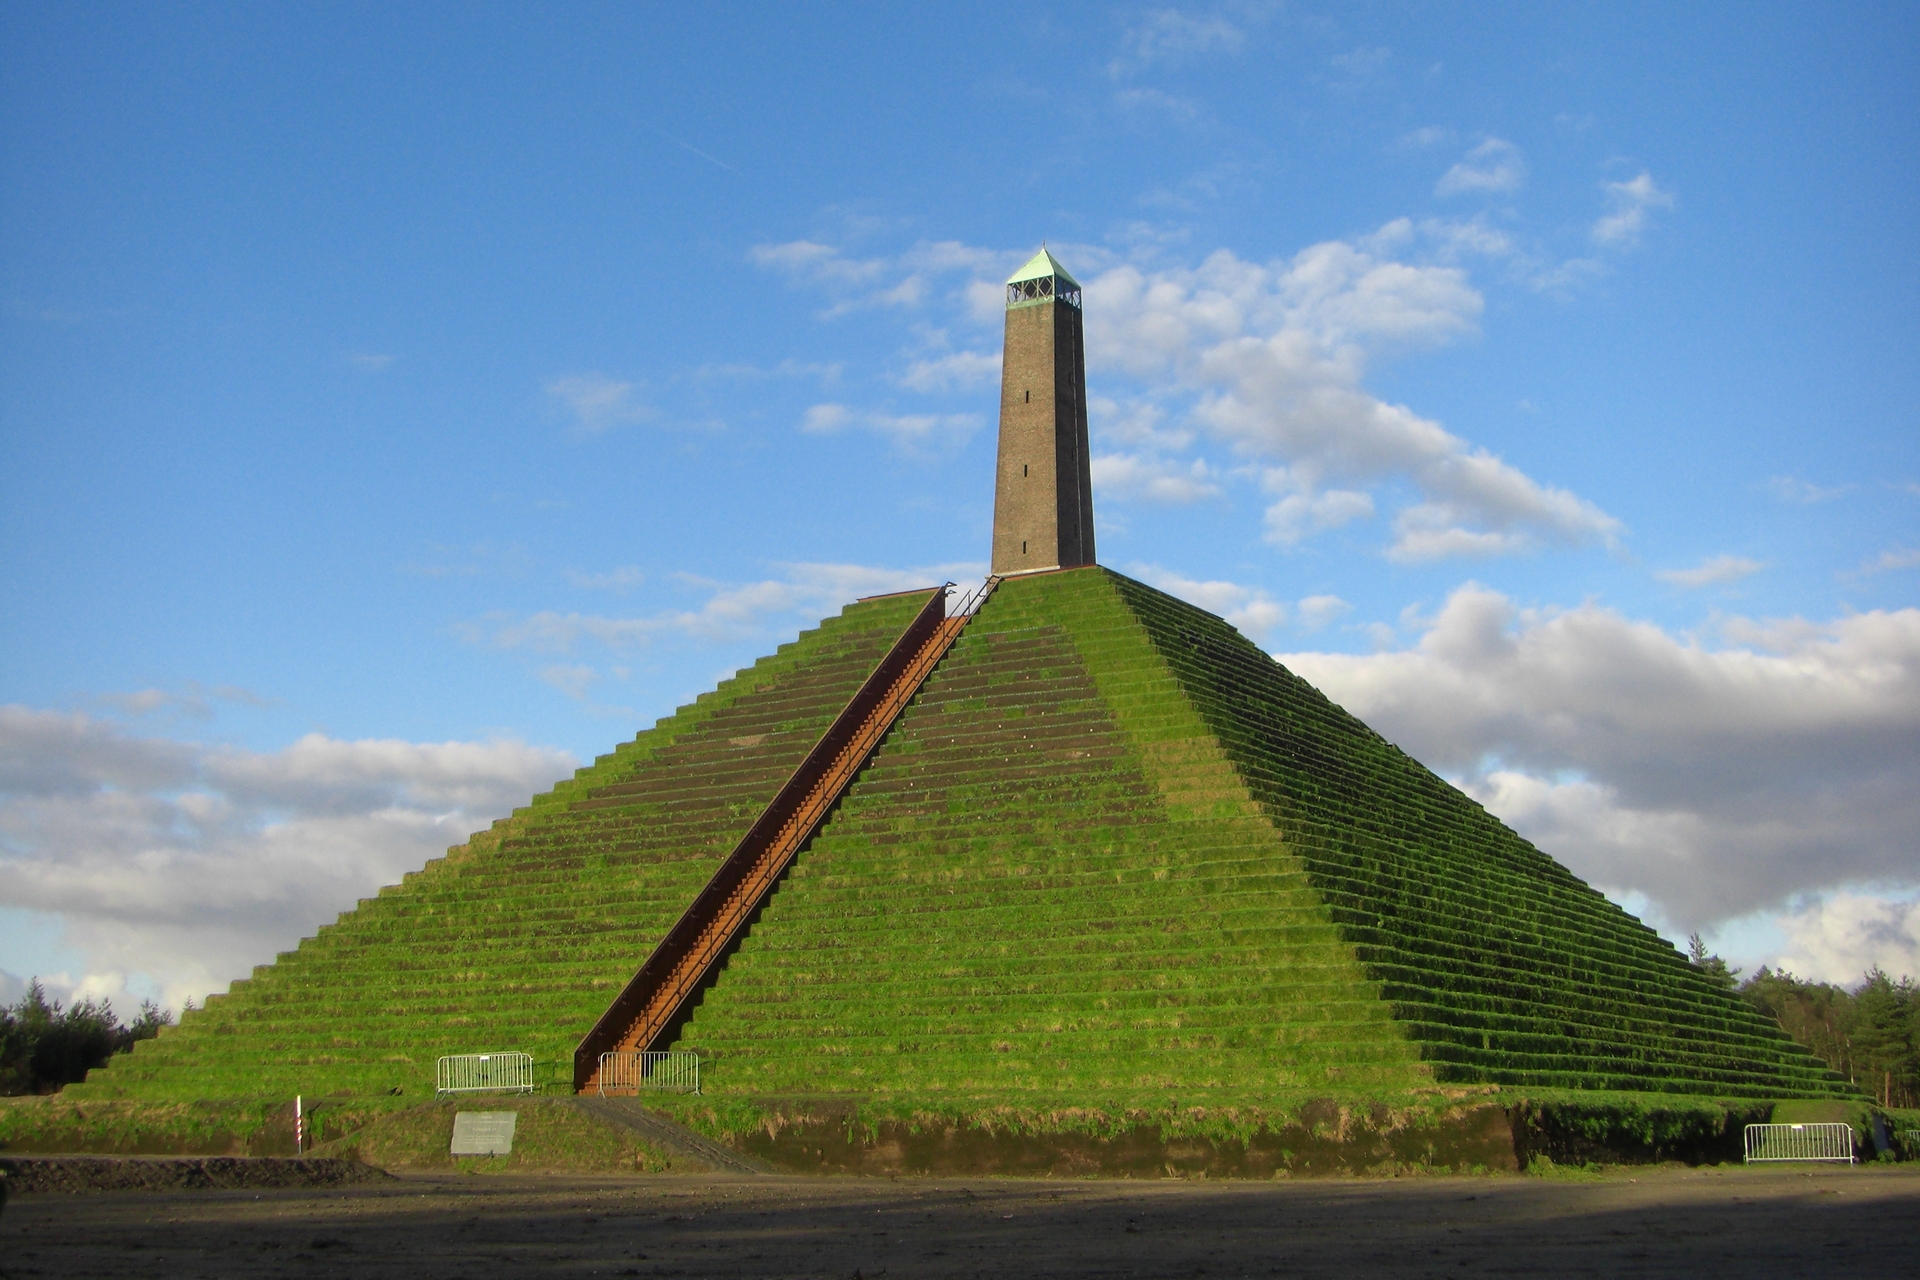 081207_NL_Pyramide_van_Austerlitz